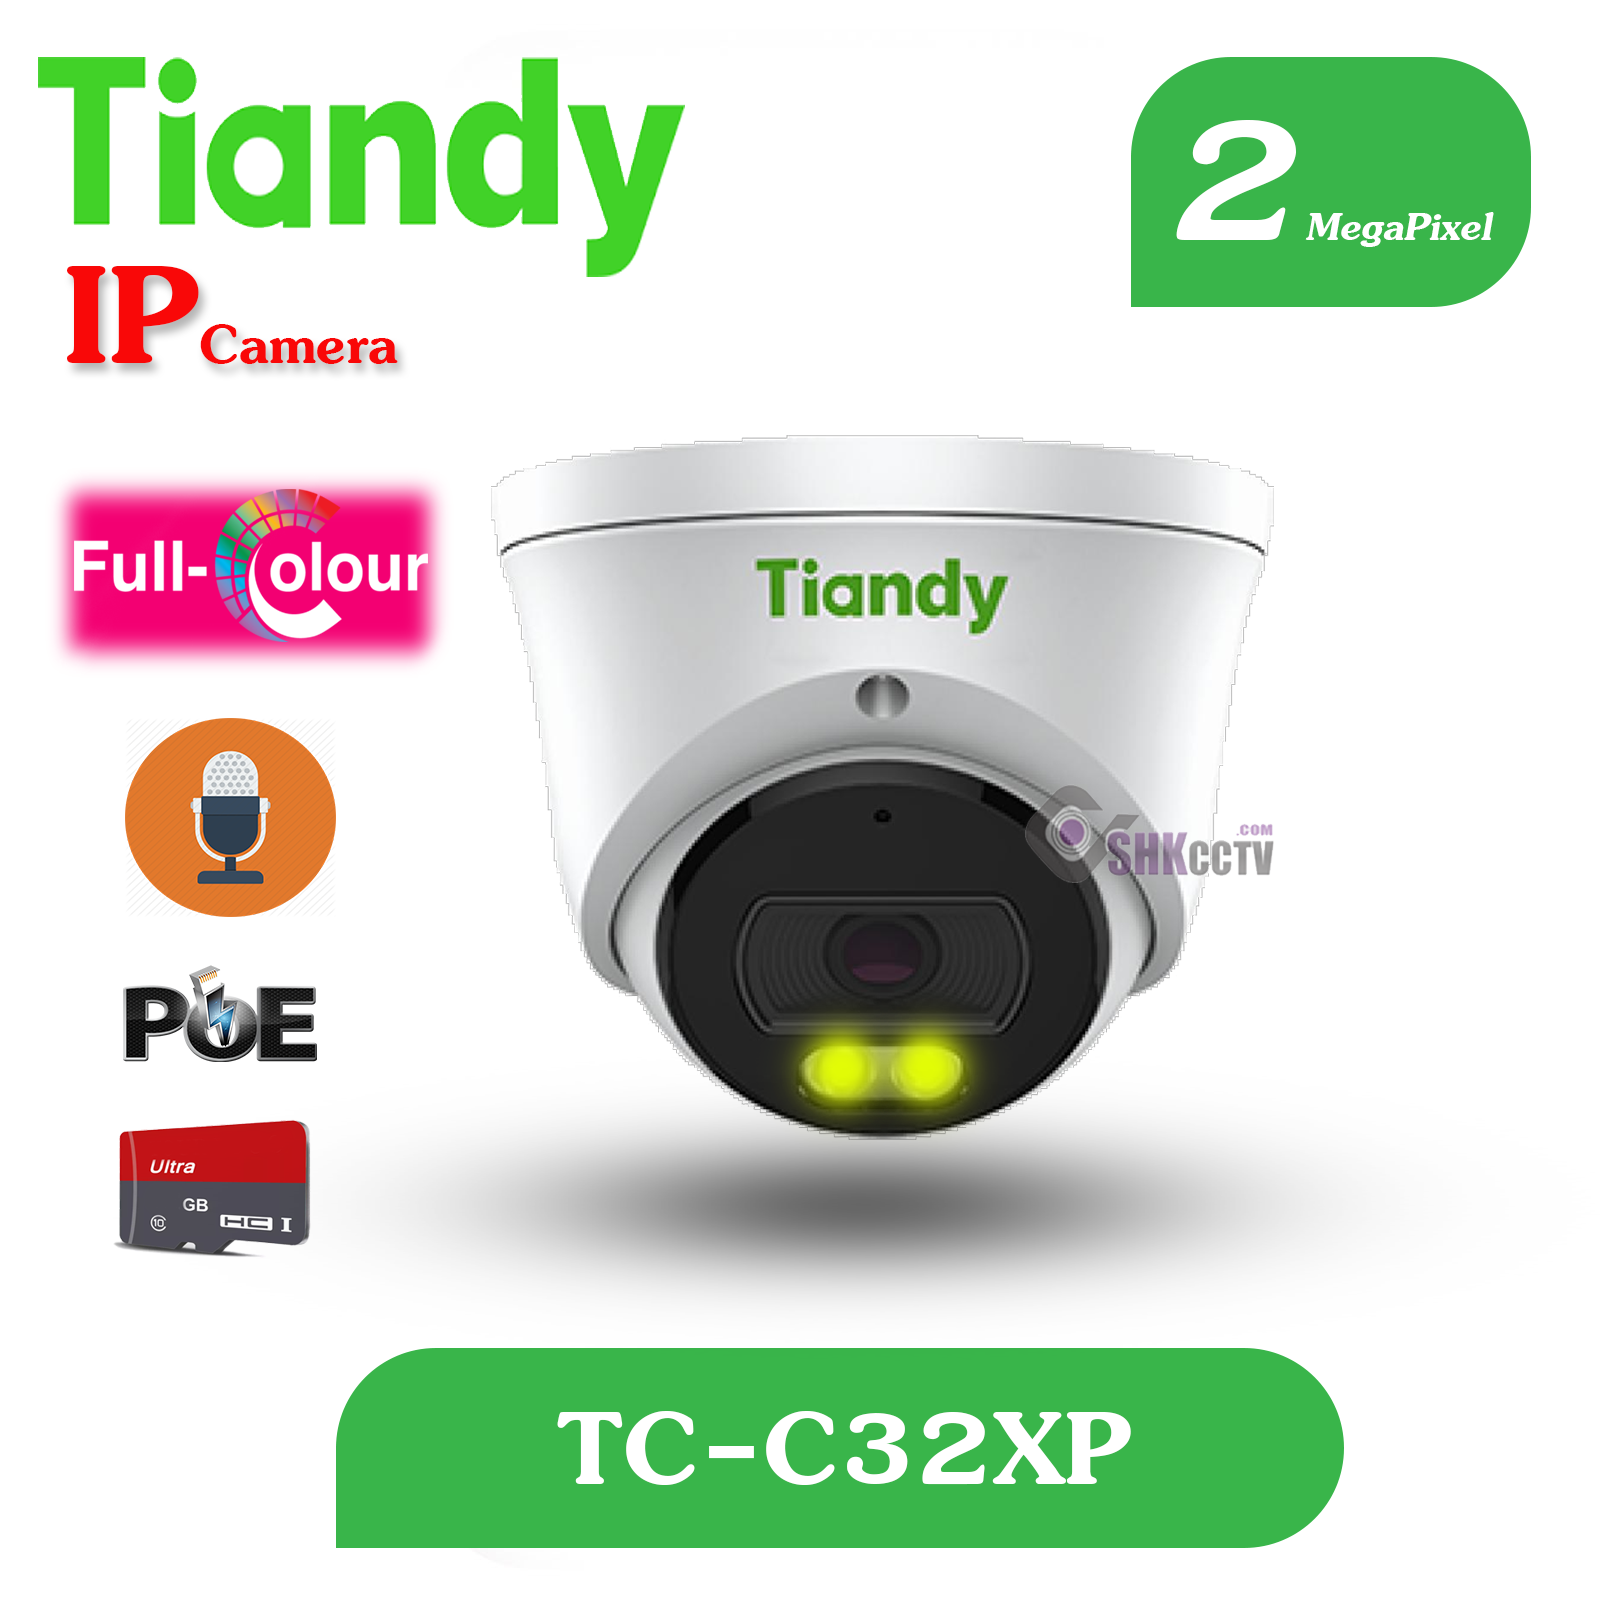 TC-C32XP tiandy